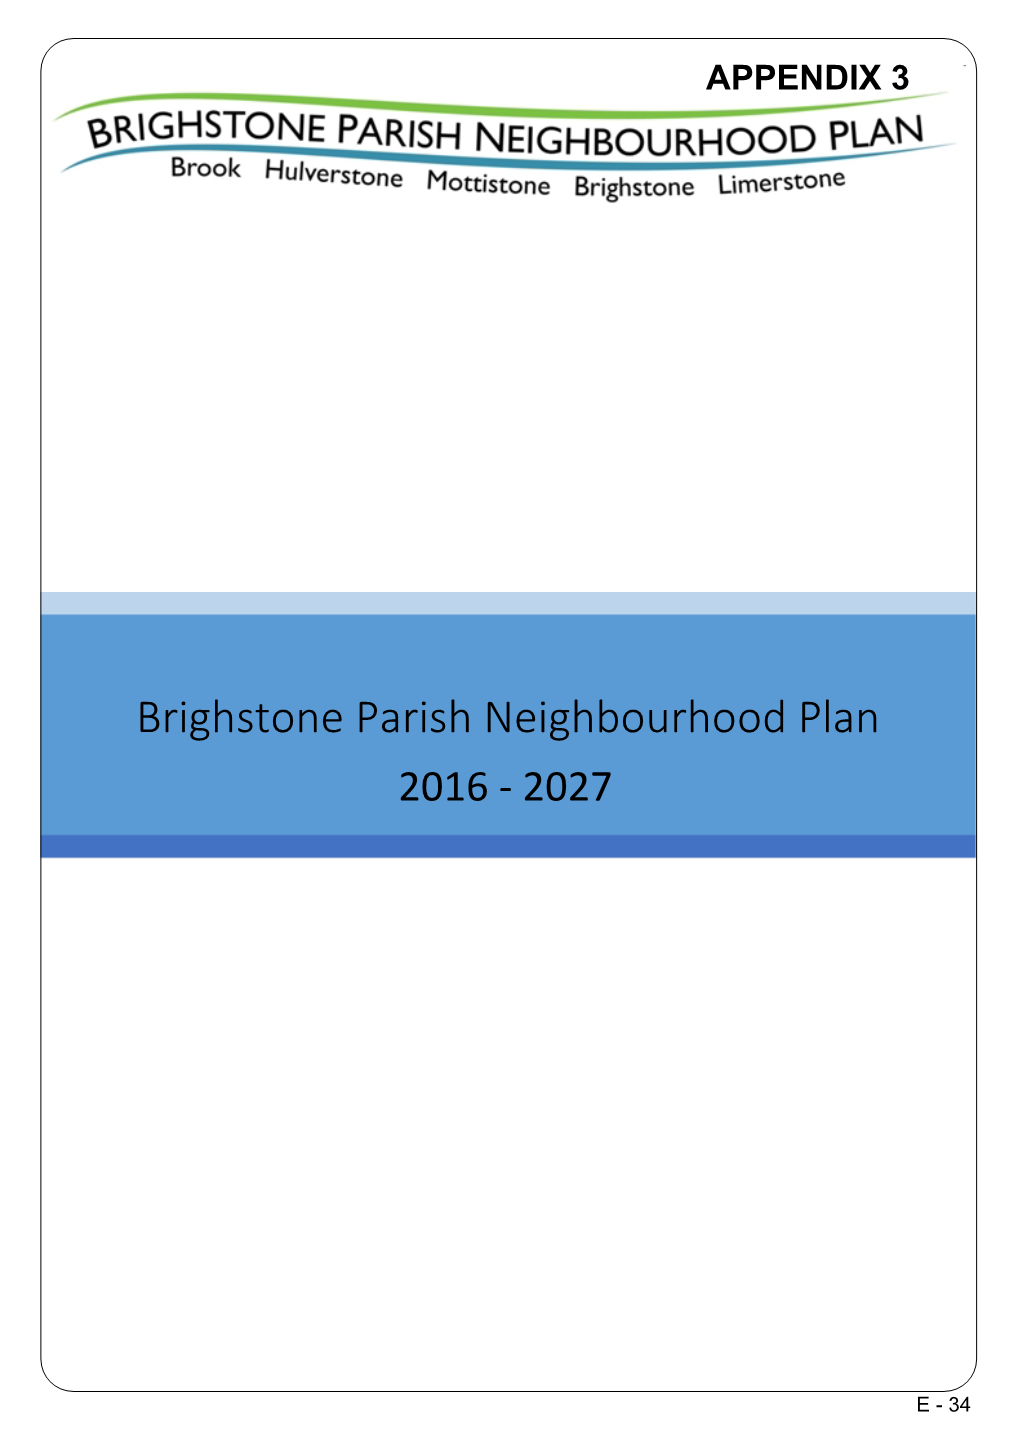 Brighstone Parish Neighbourhood Plan 2016 - 2027